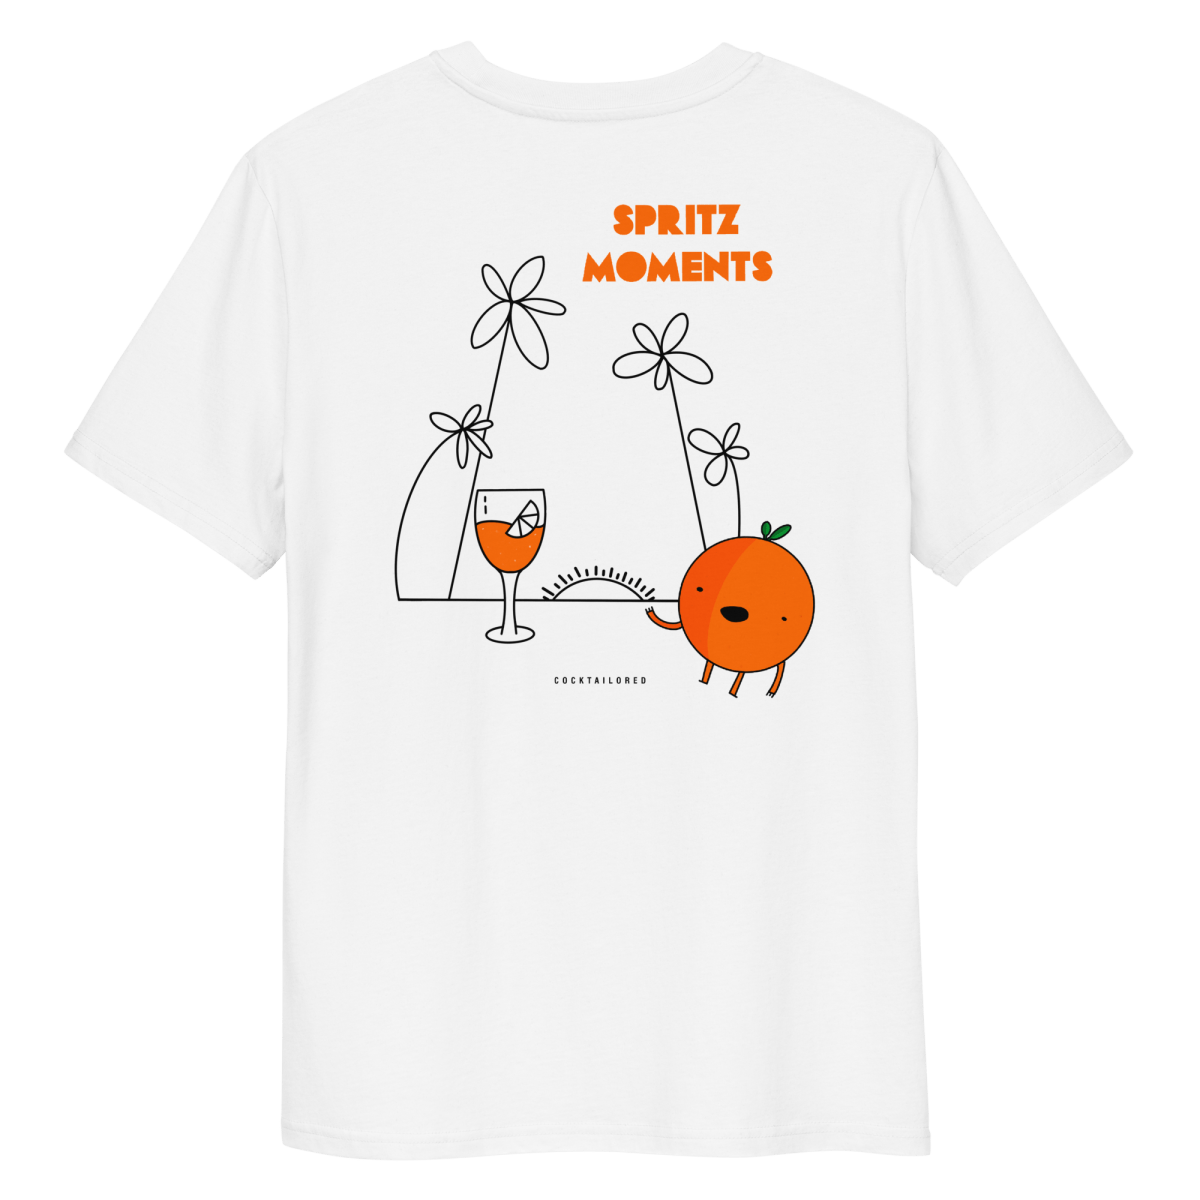 The Spritz Moments Organic T-shirt